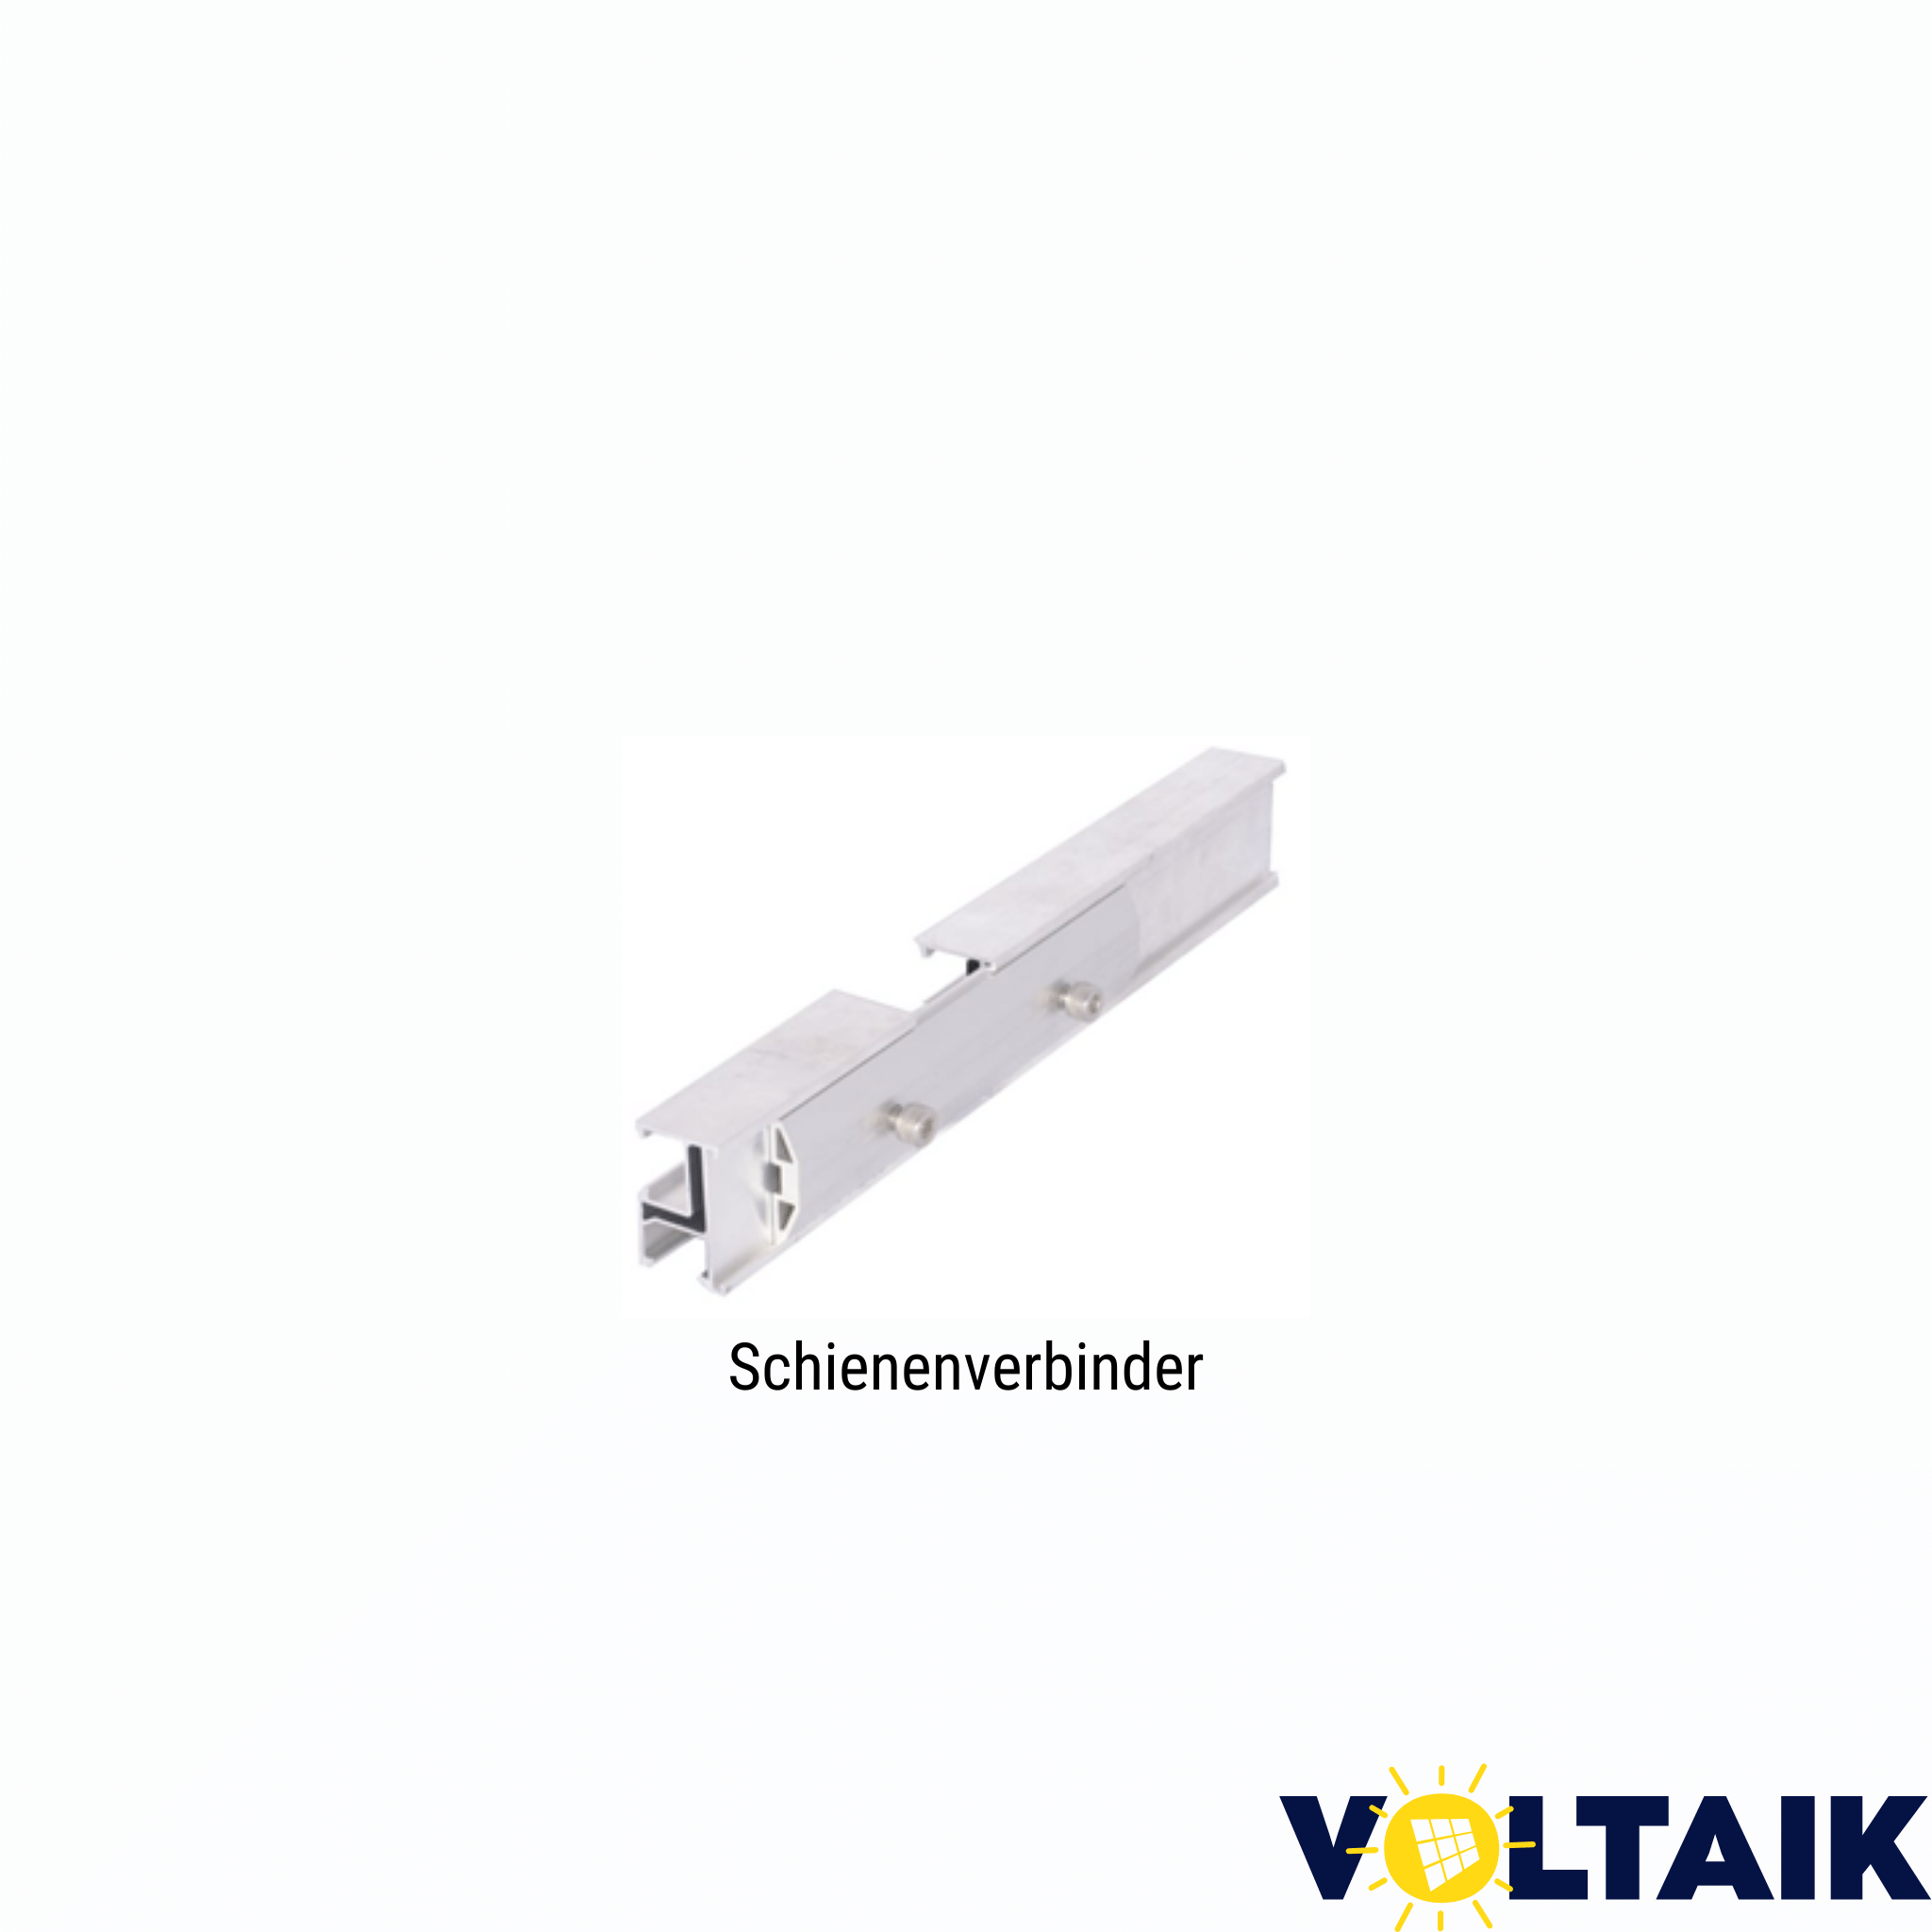 Schienenverbinder - Voltaik.shop